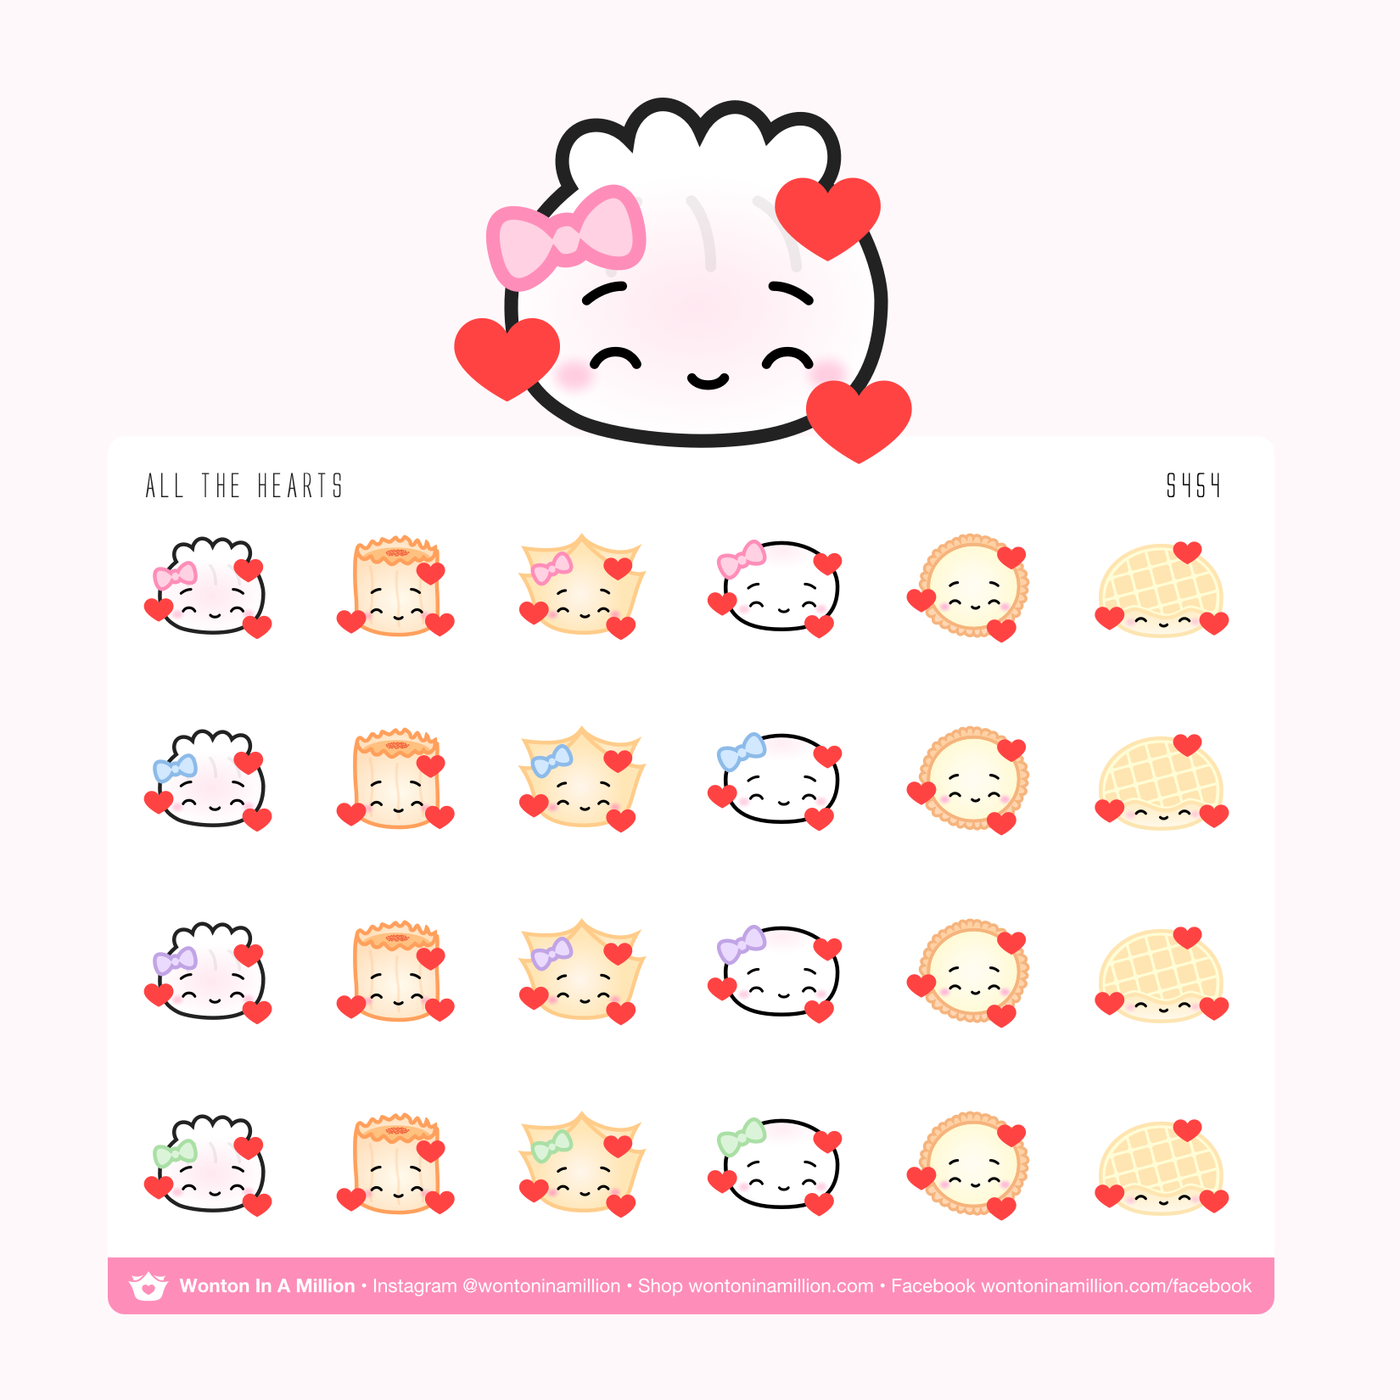 S454 | All The Hearts Emoji Stickers